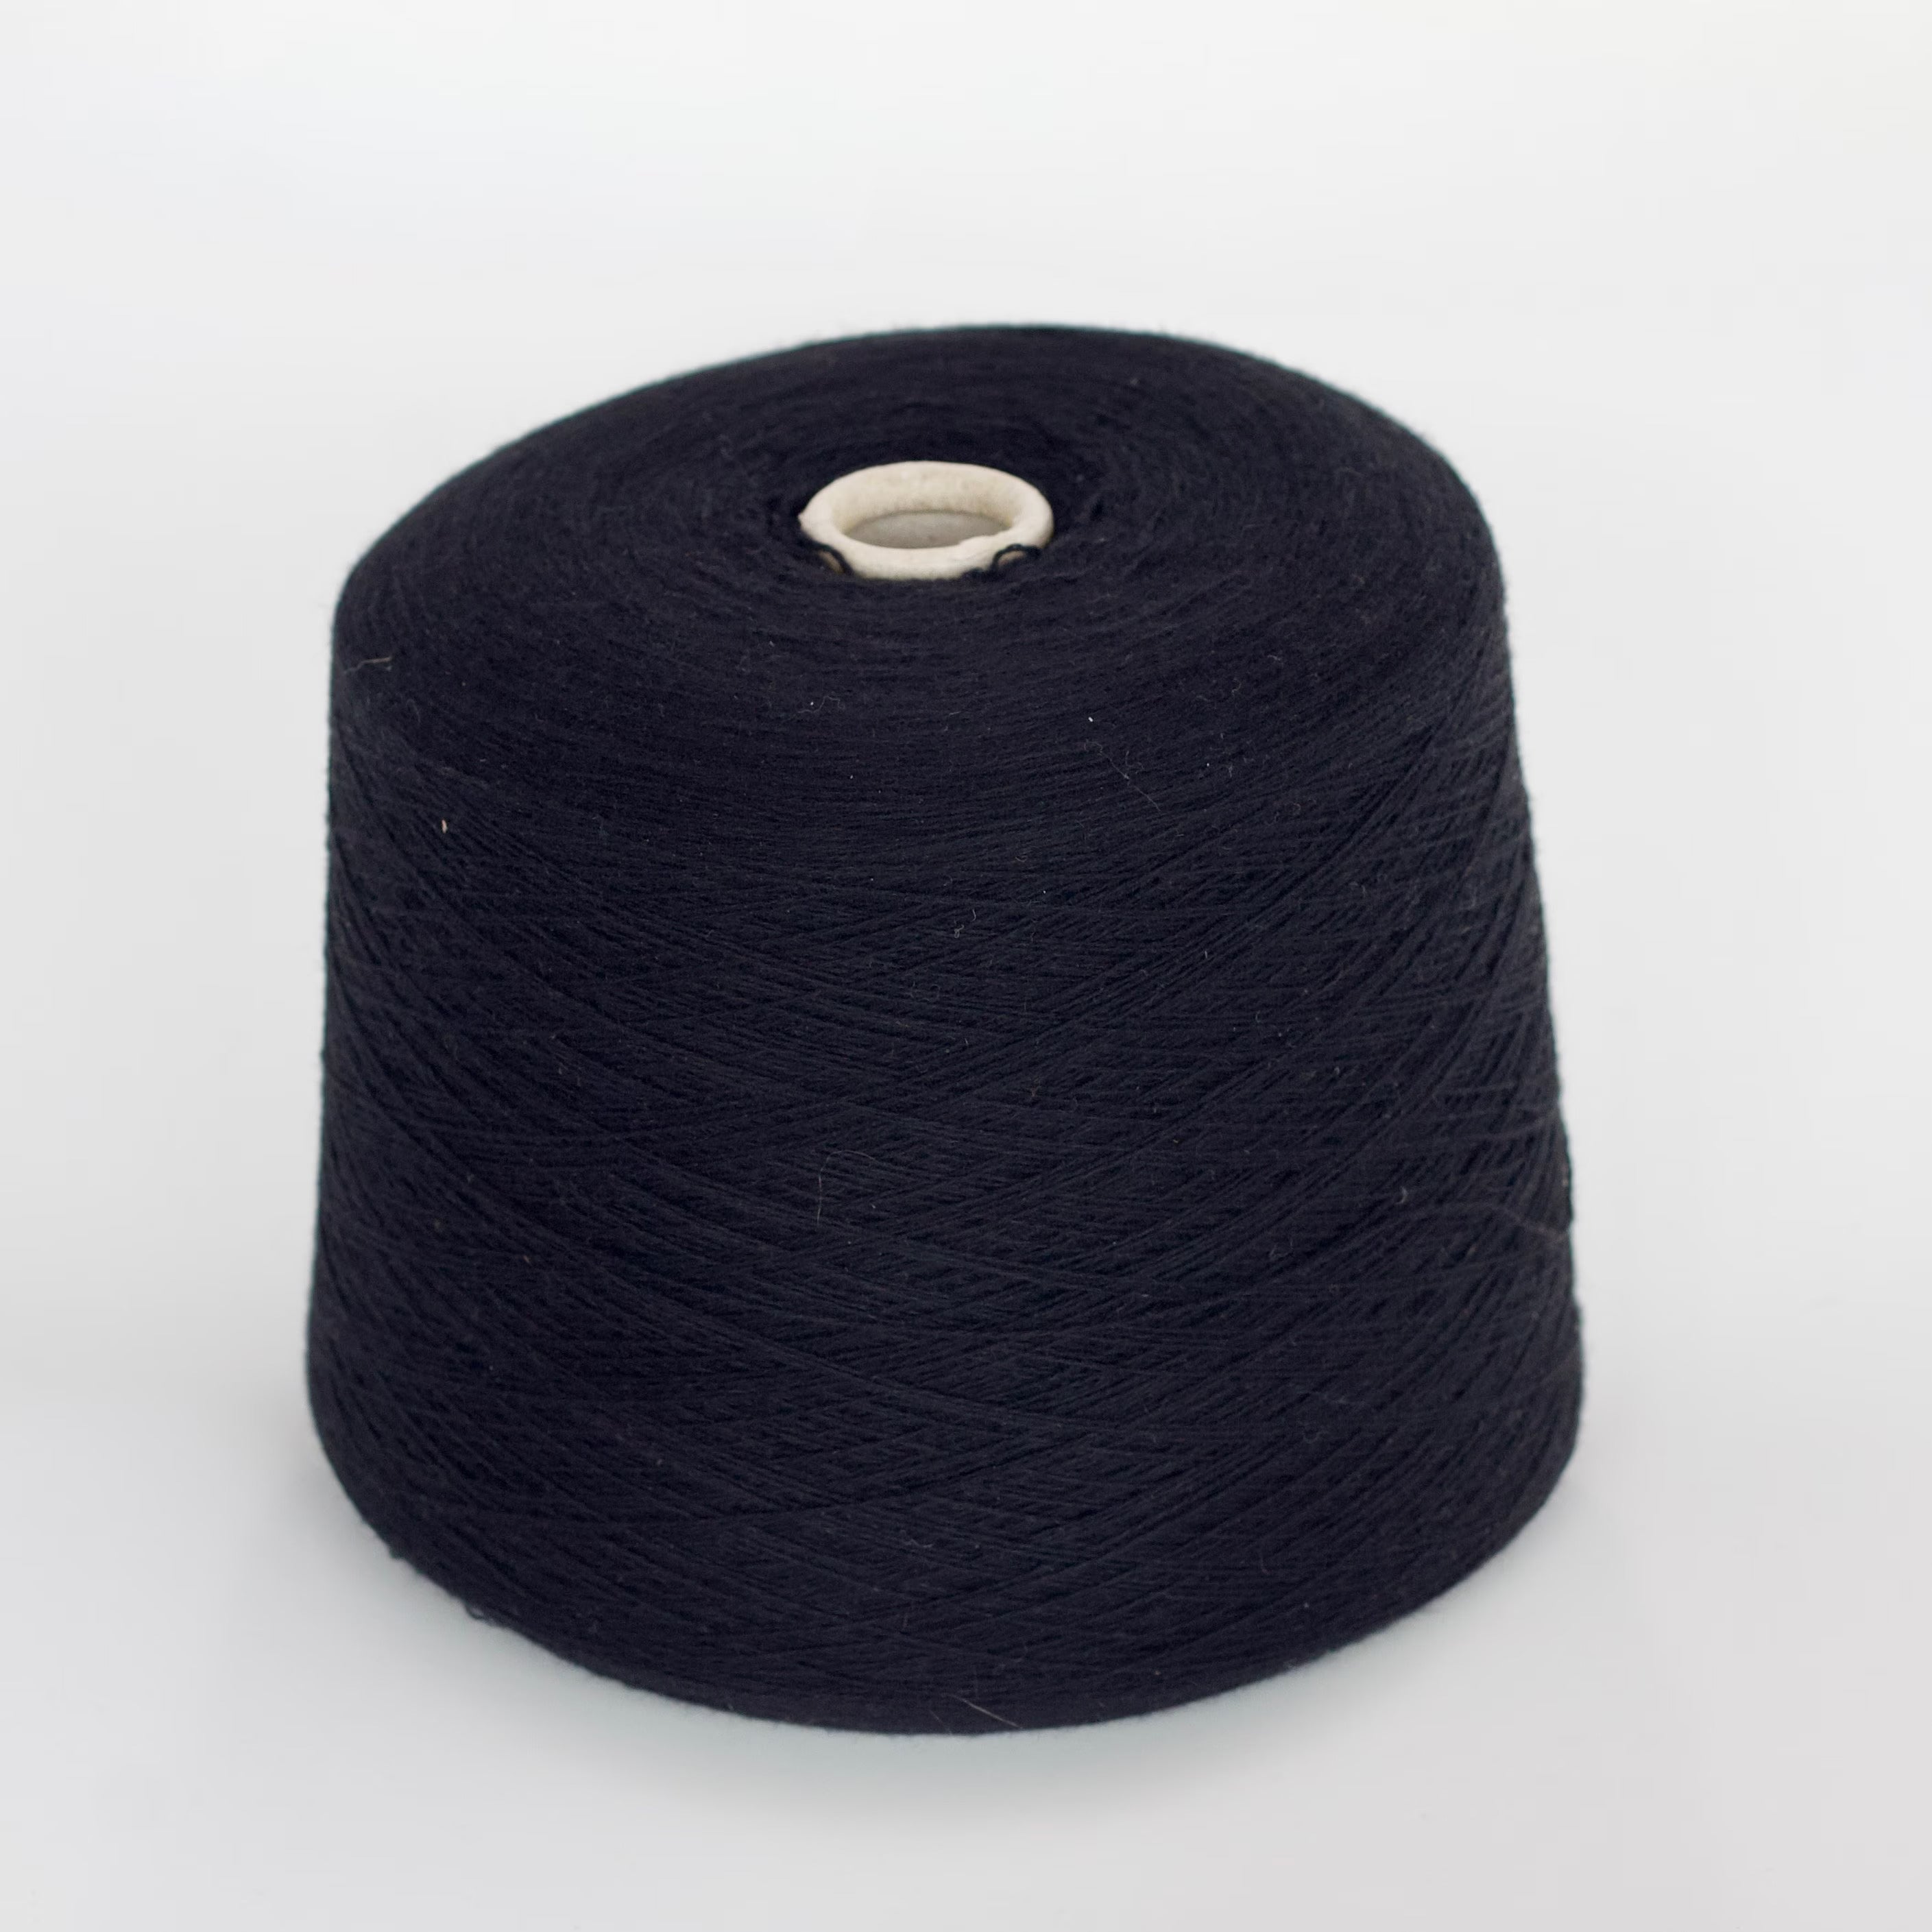 100% cashmere yarn on cone, pure cashmere yarn, lace weight yarn